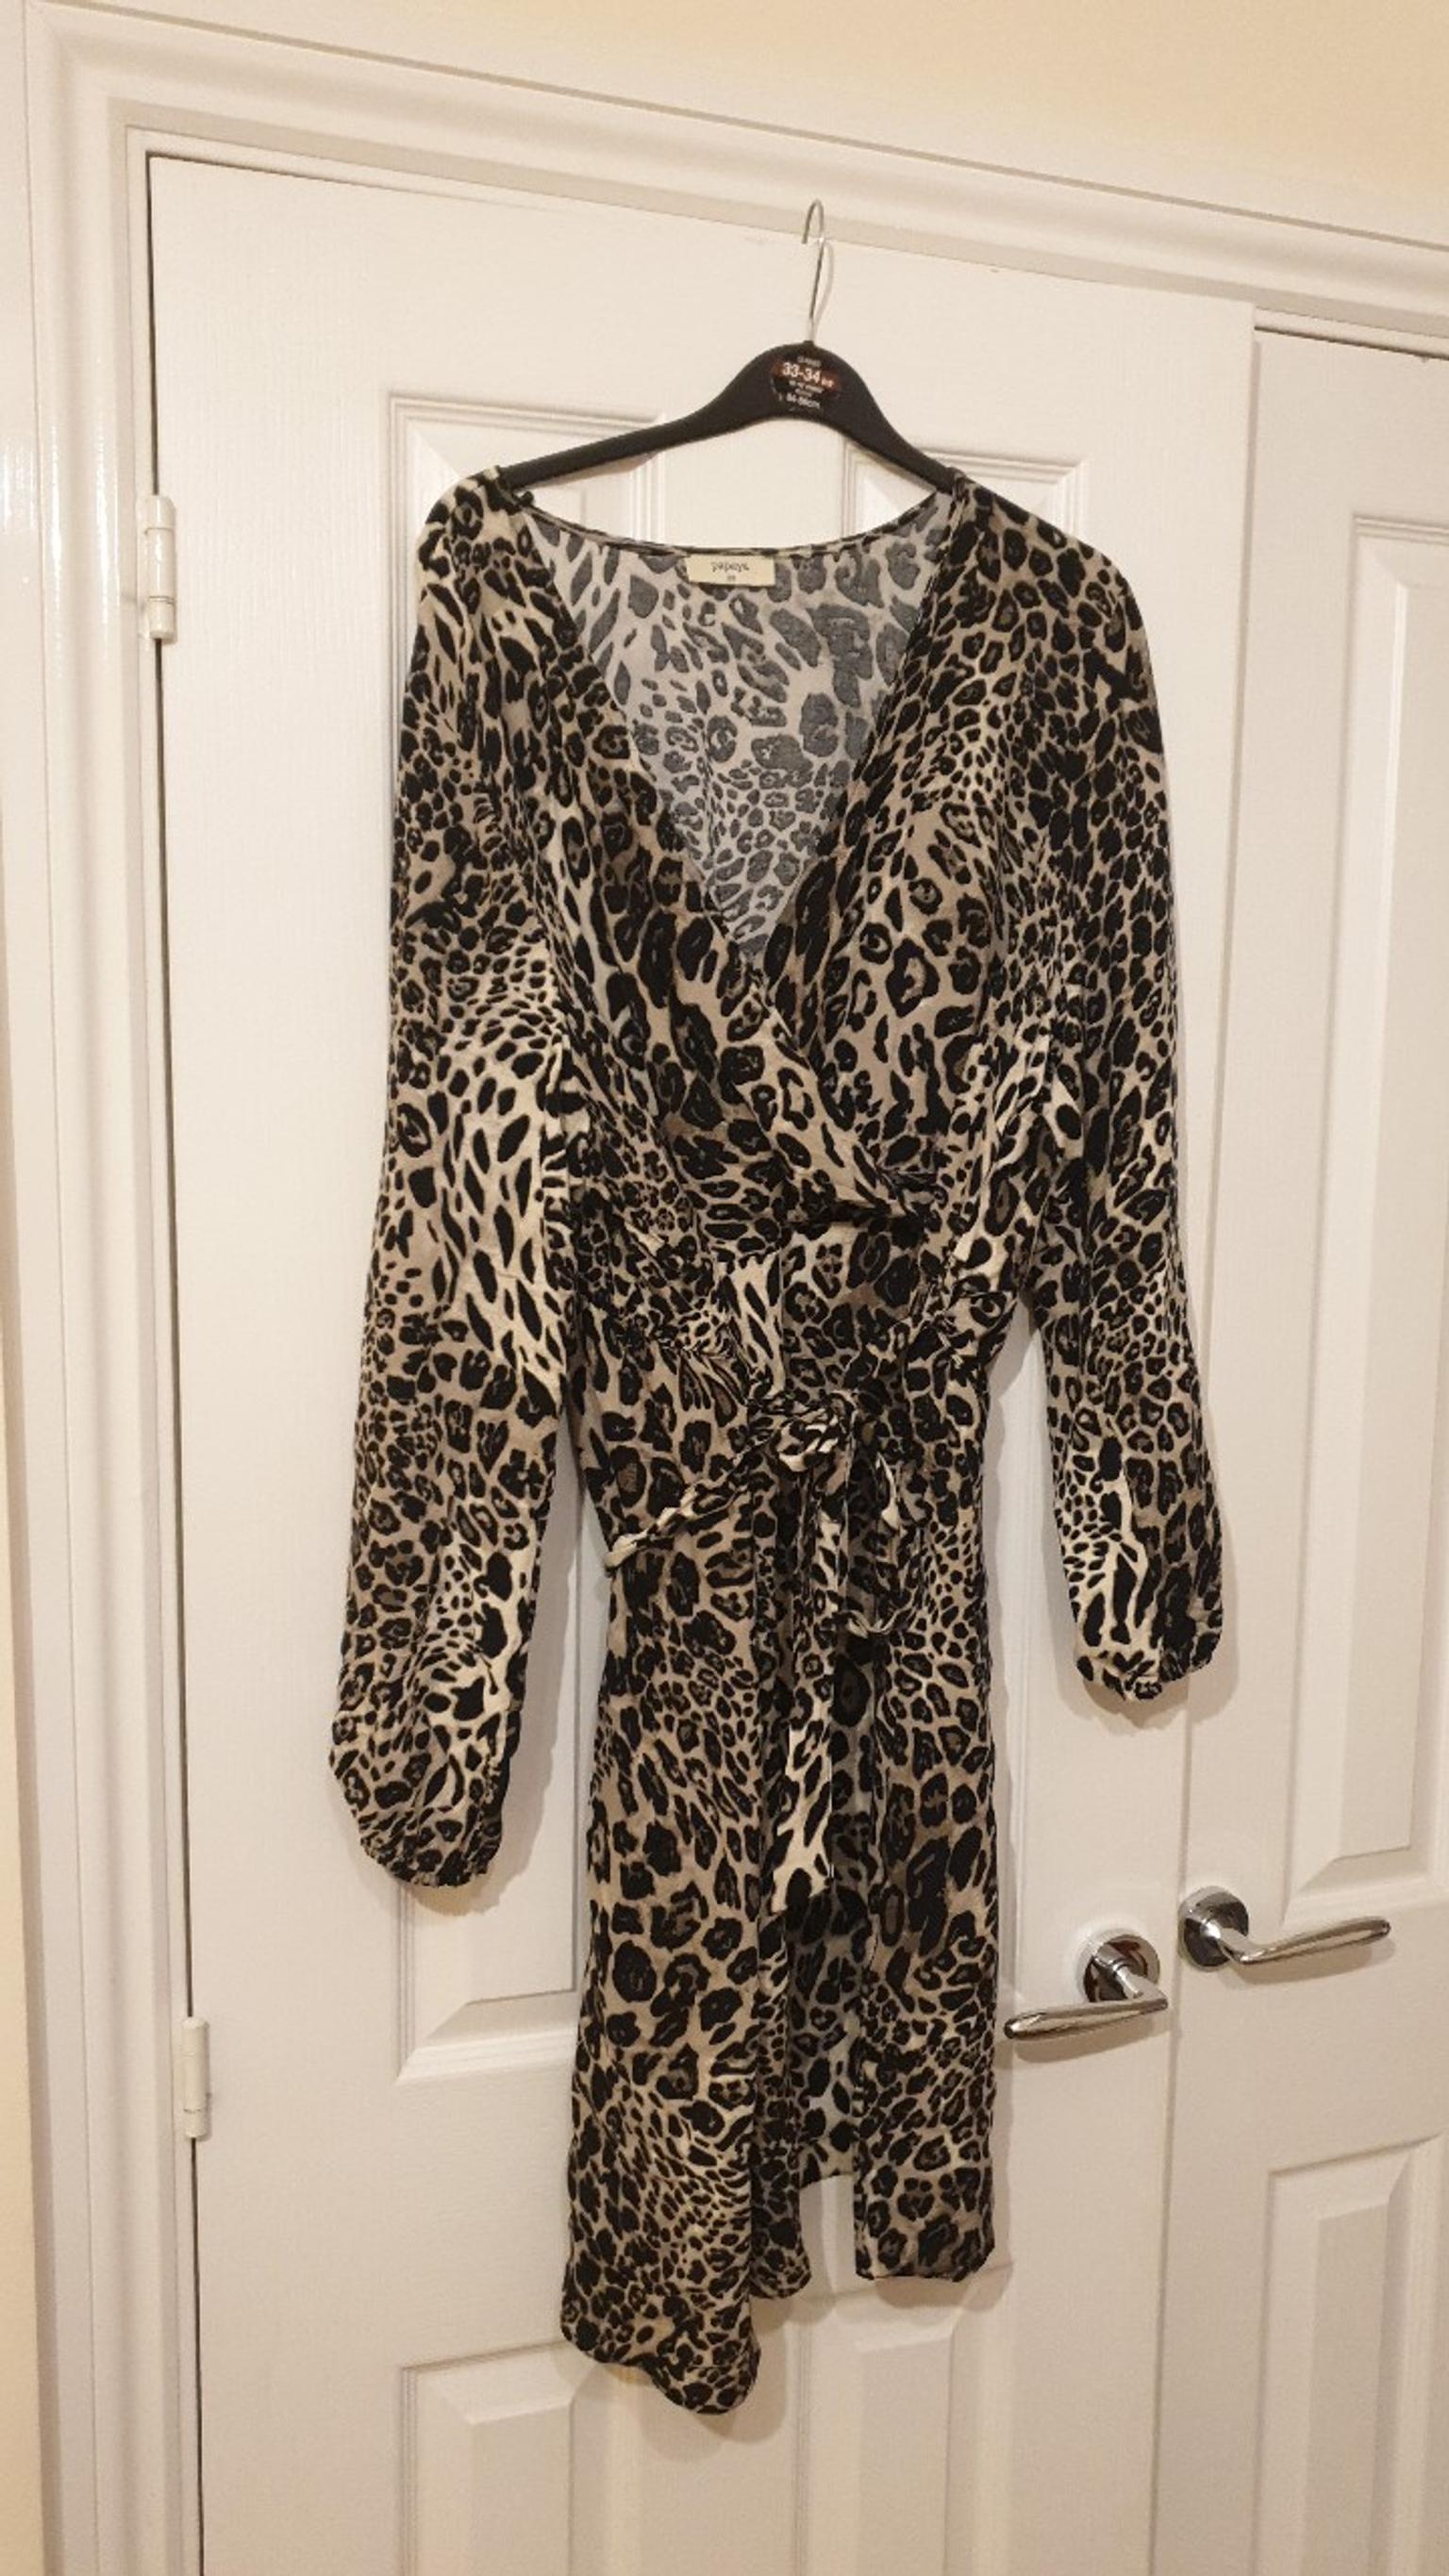 matalan leopard print dress